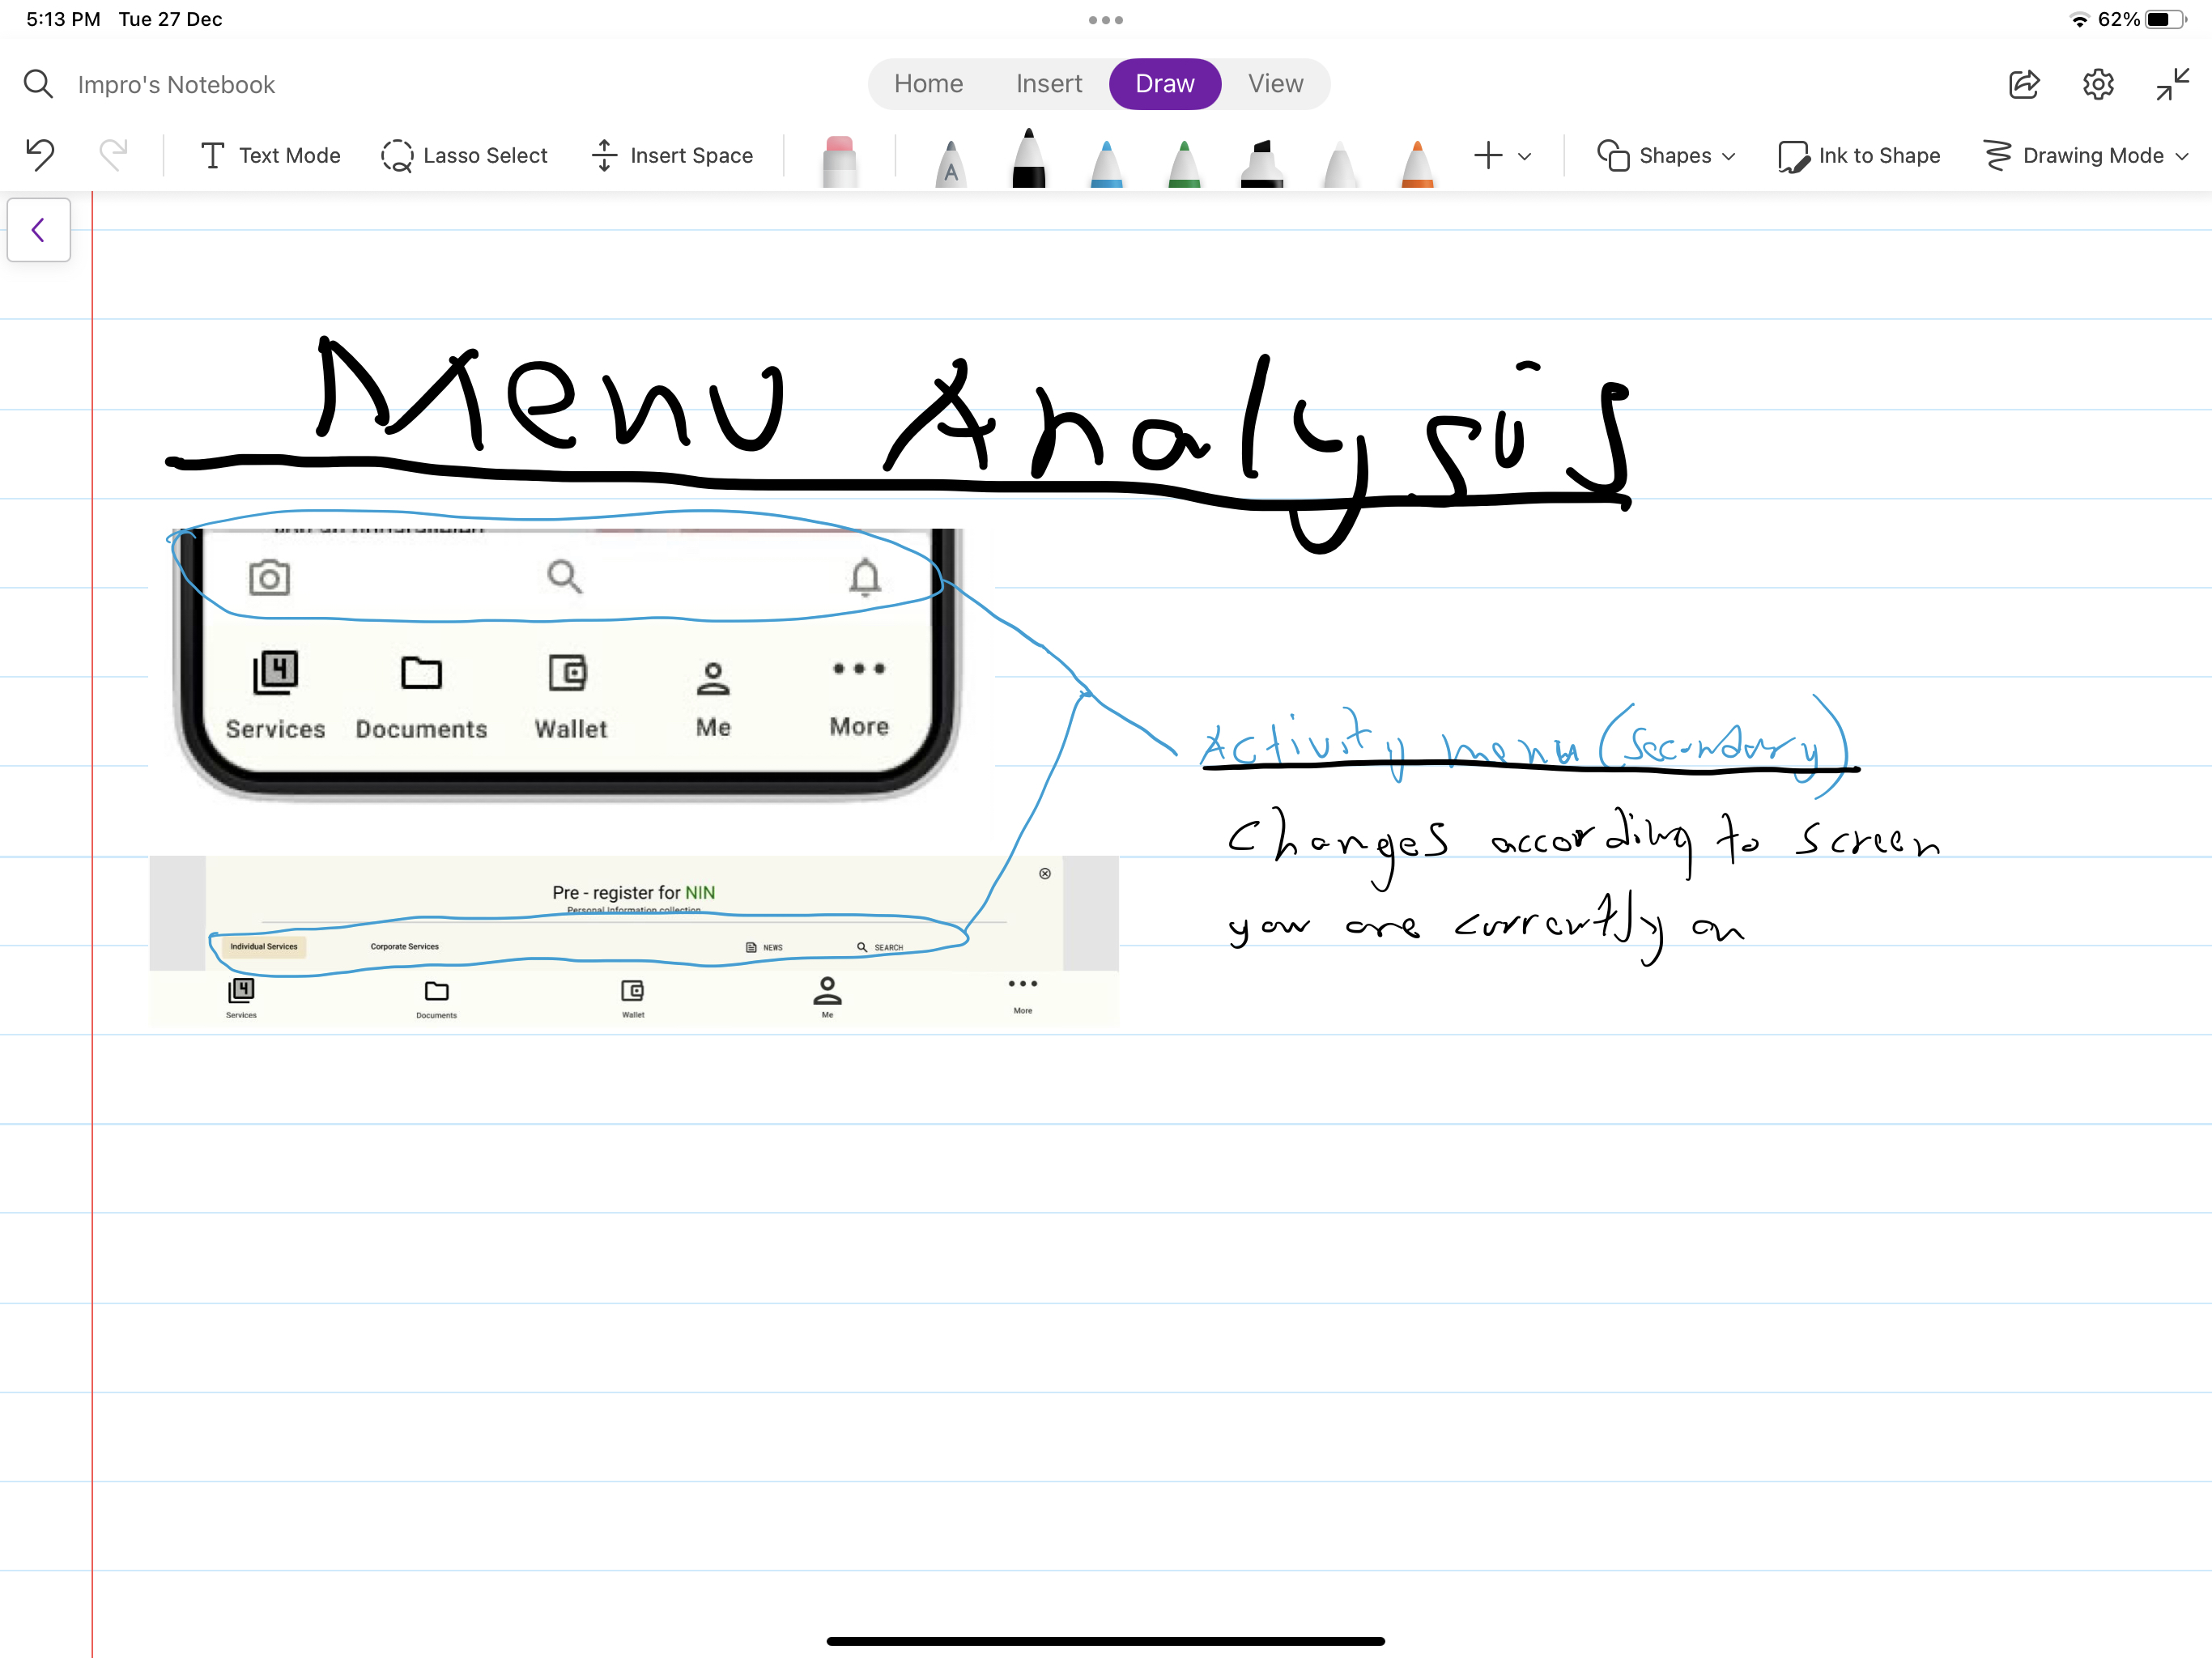 Abdul's portolio project titled: Image displaying menu analysis.